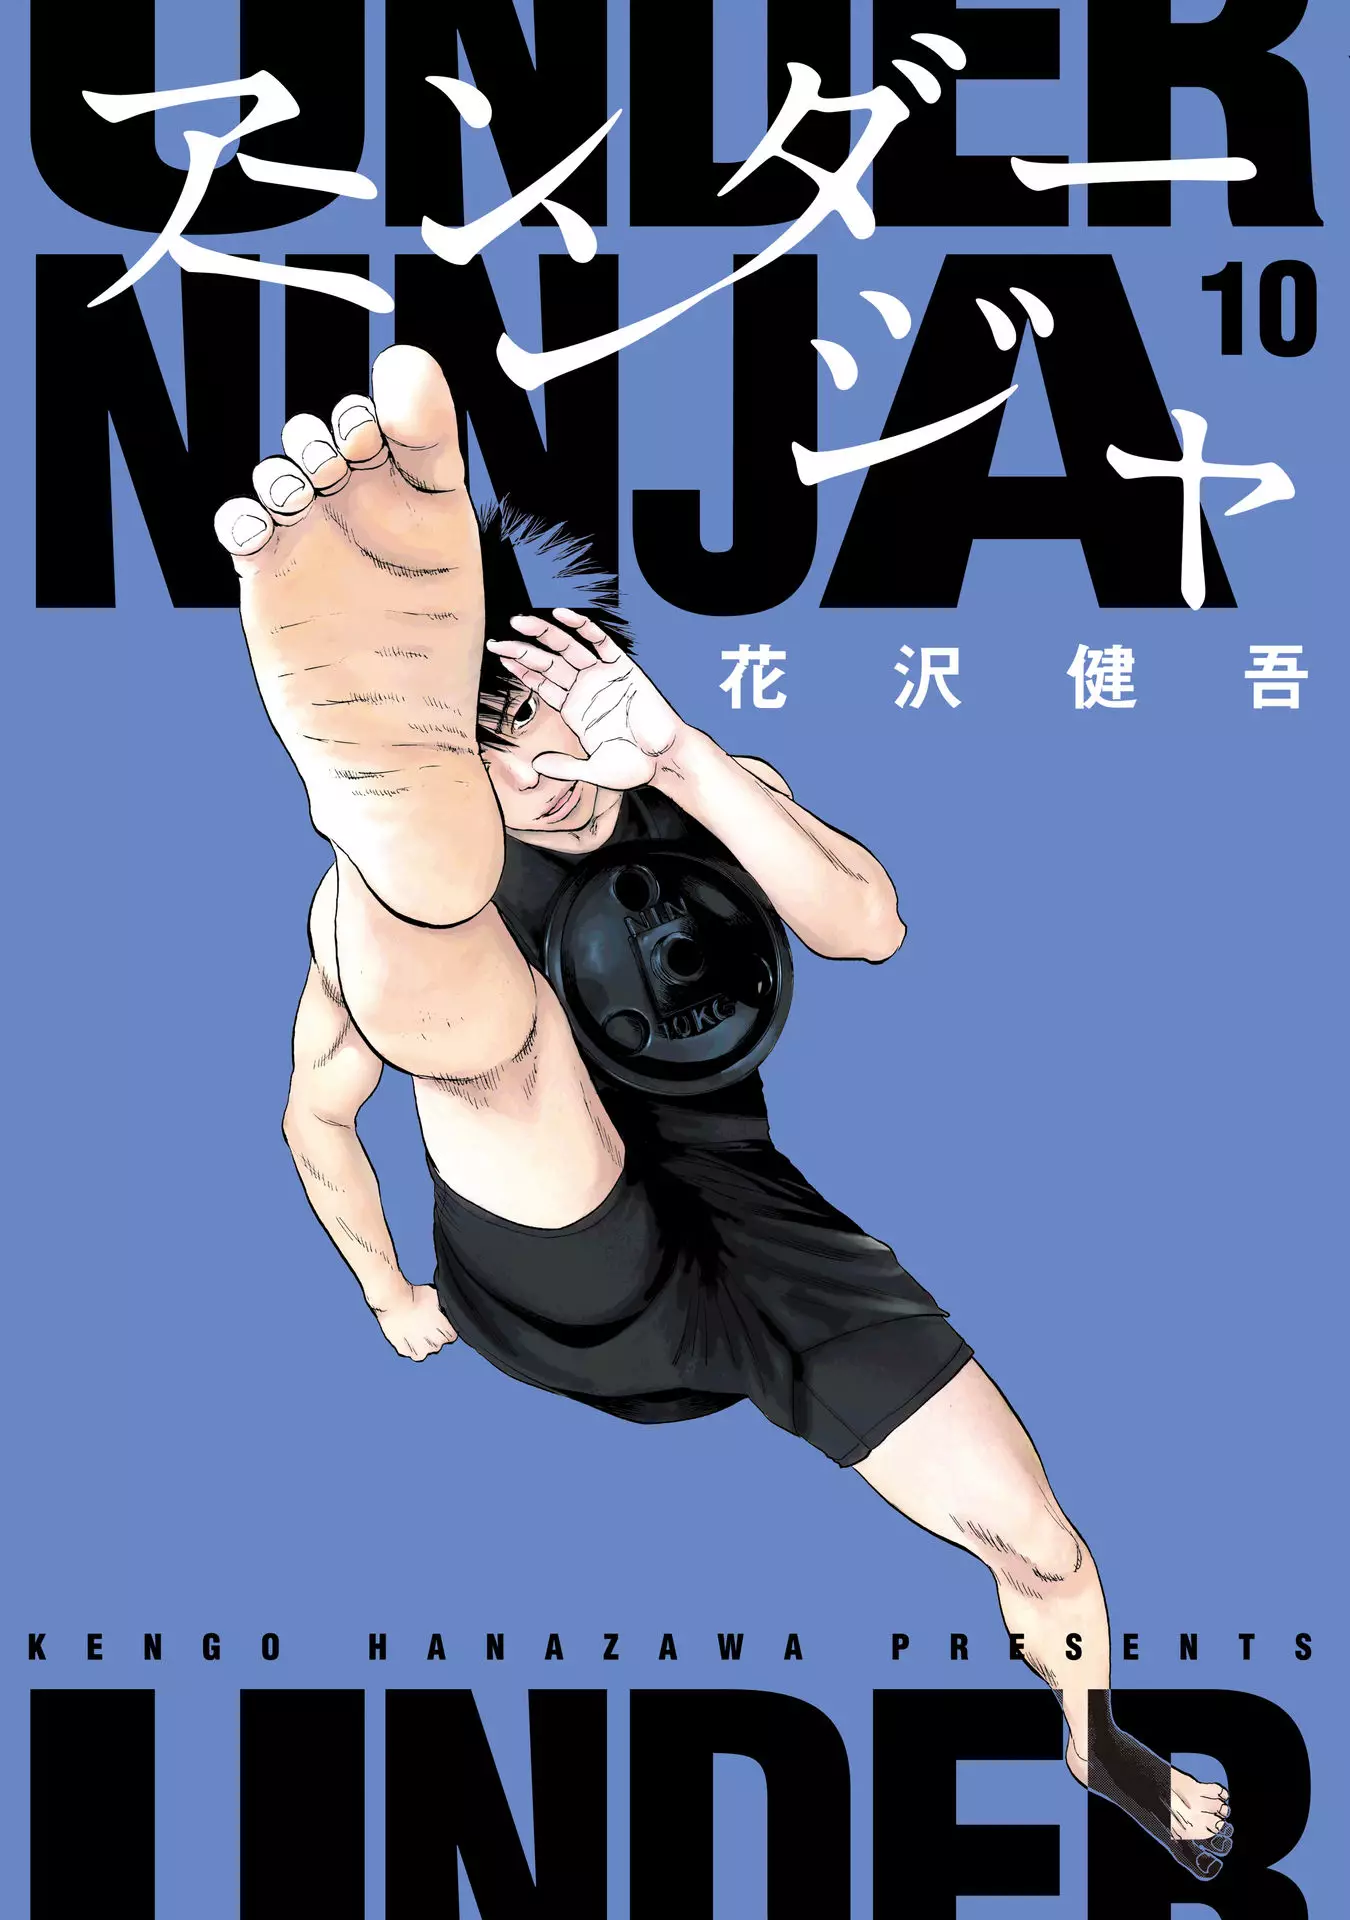 Read Under Ninja 54 - Oni Scan